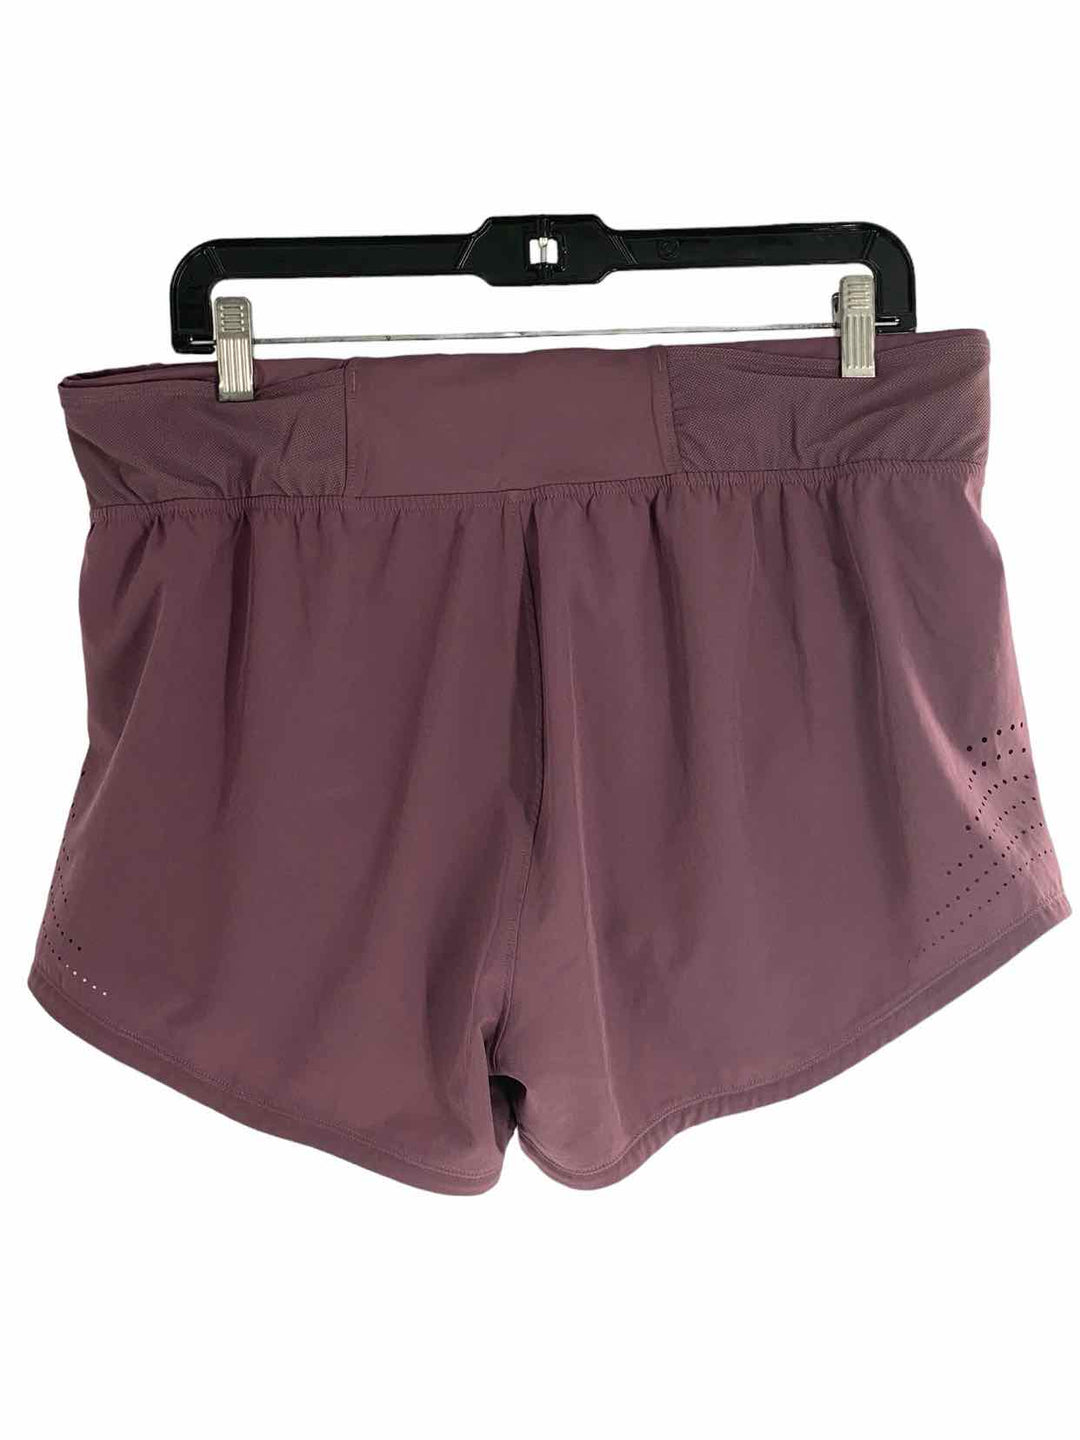 Under Armour Size XL Purple Shorts